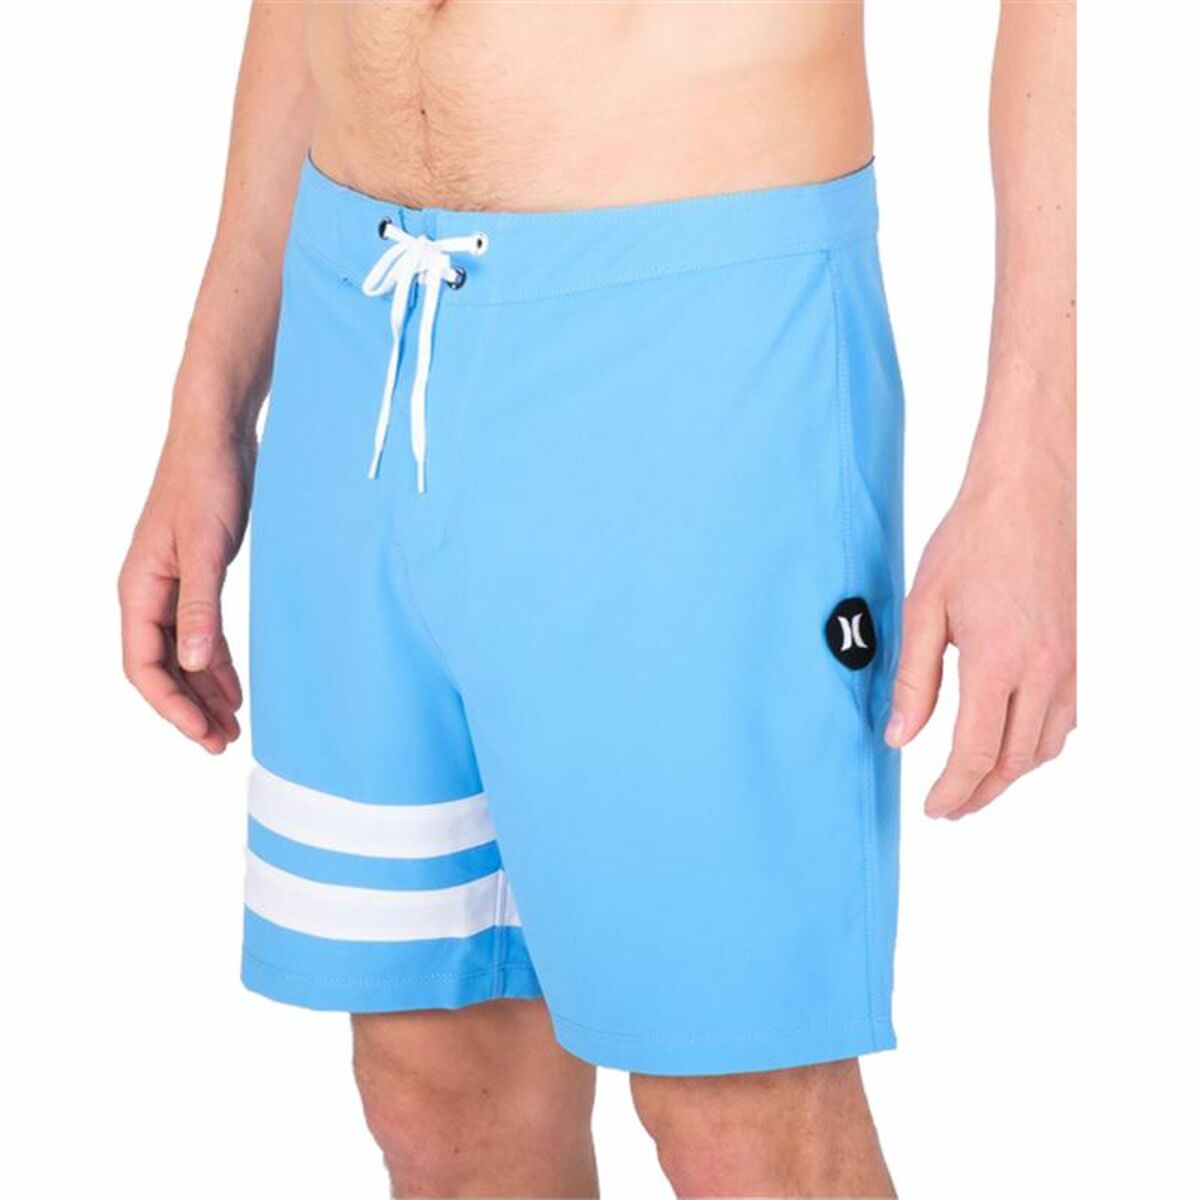 Men’s Bathing Costume Hurley Block Party 18" Sky blue